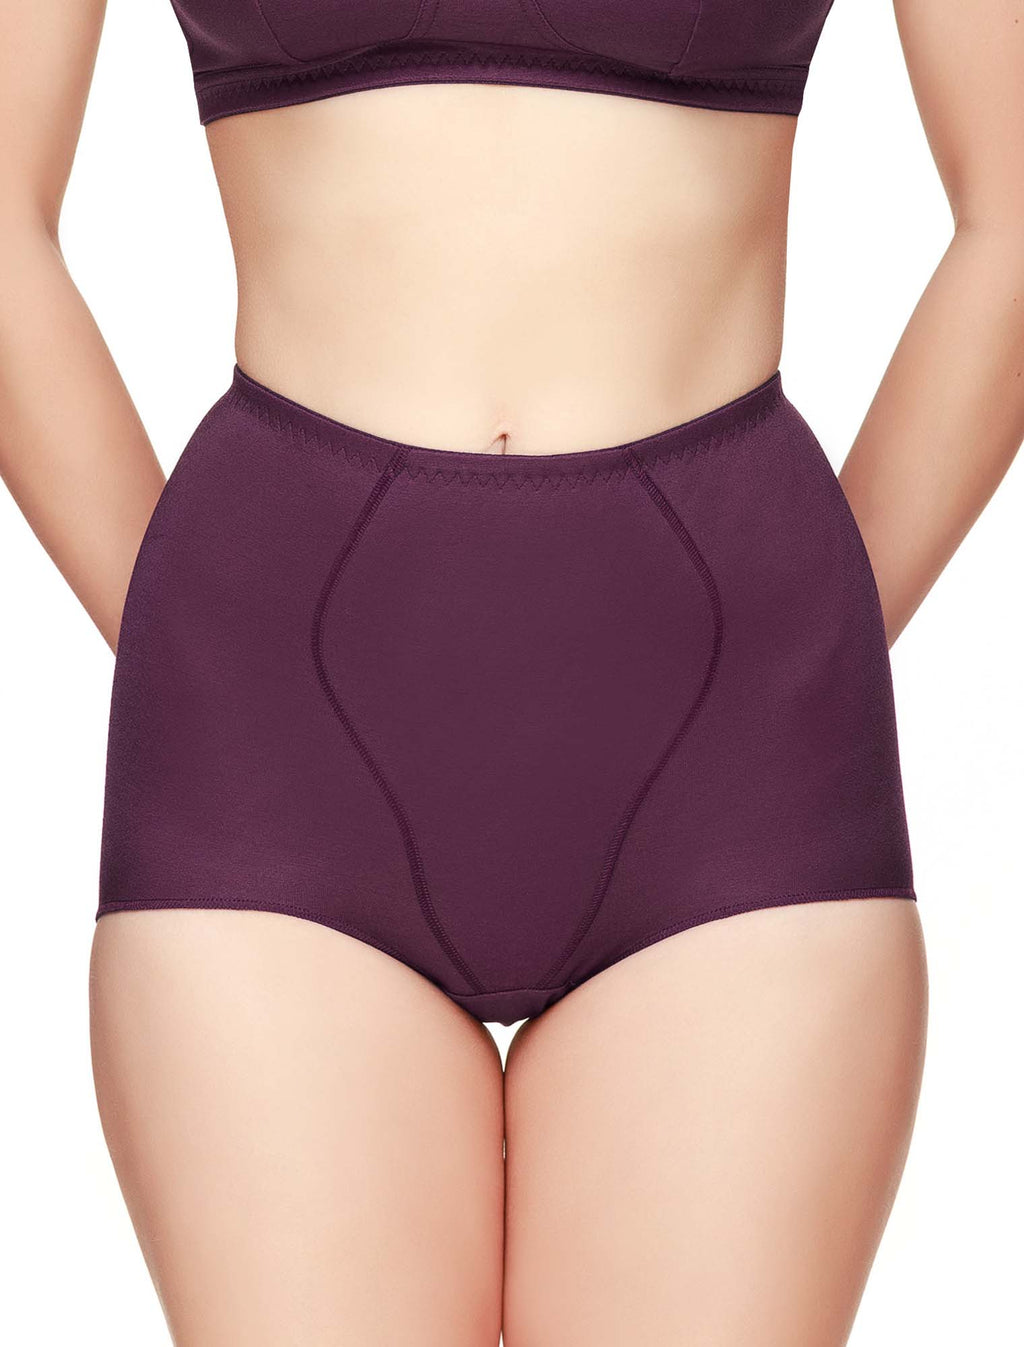 Lauma, Burgundy High Waist Panties, On Model Front, 01851